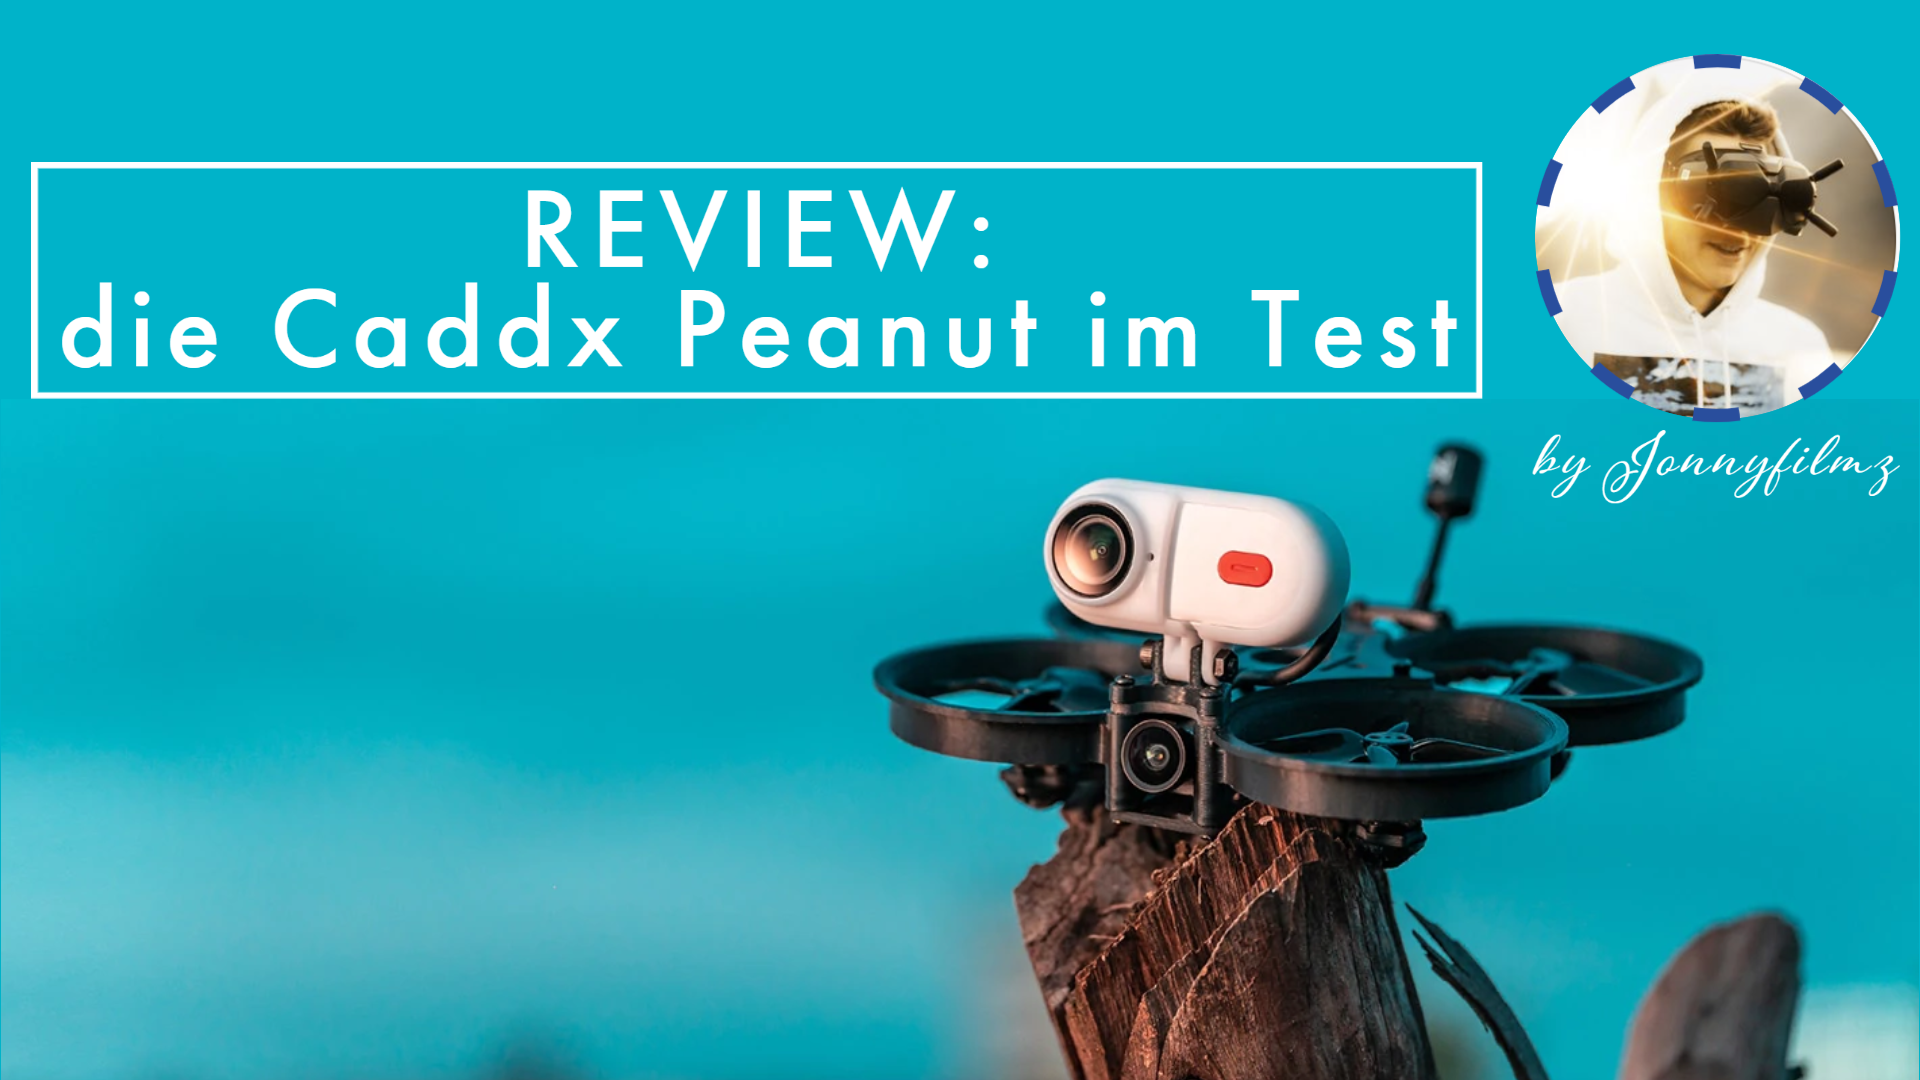 Review: Caddx Peanut Kamera